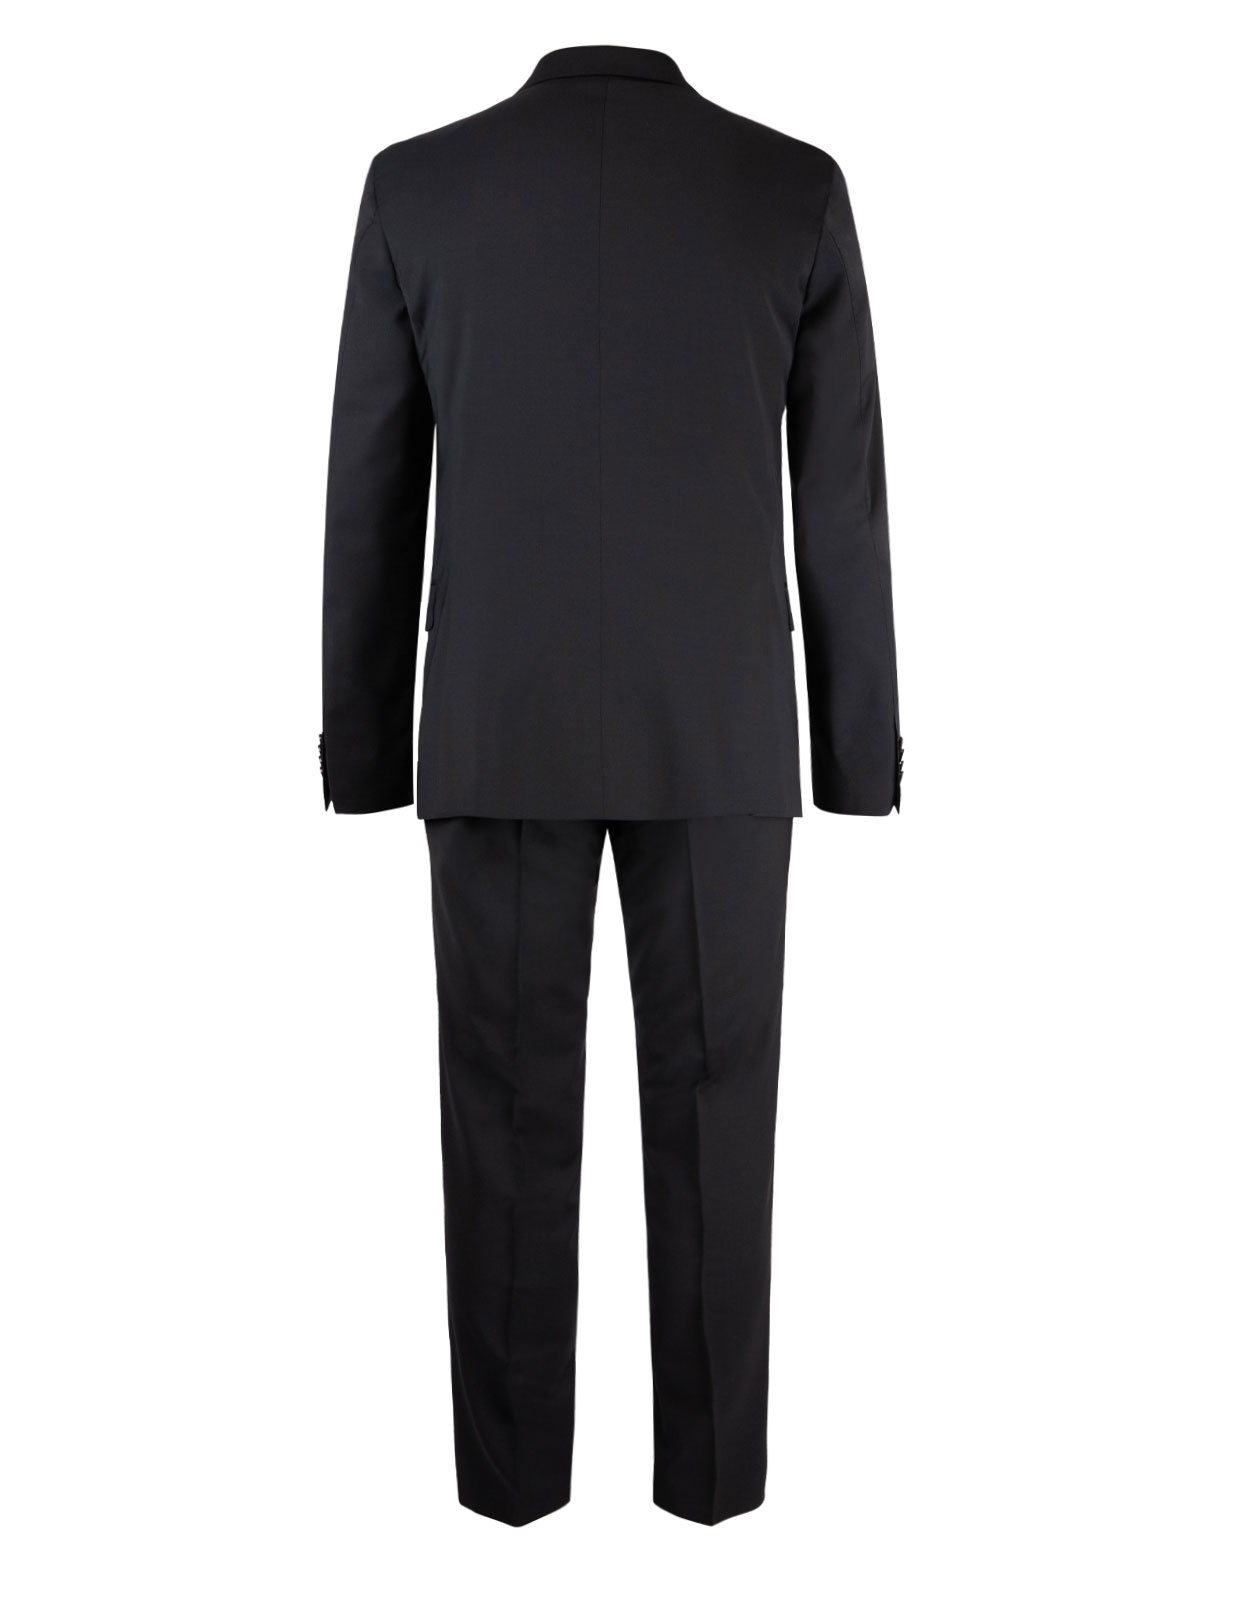 Falk Suit Regular Stretch Wool Black